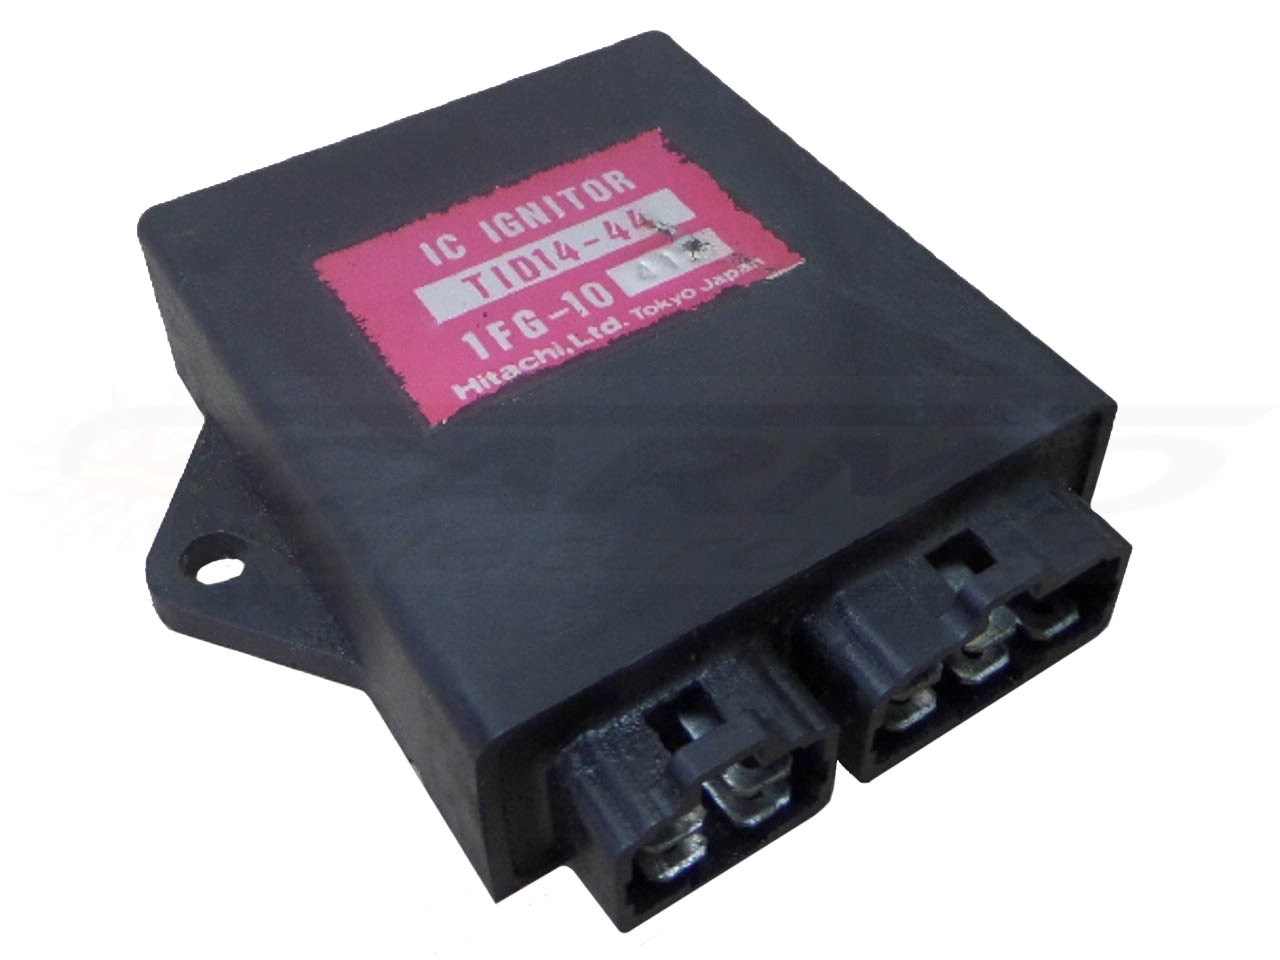 XJ750 Fuel Injection CDI TCI igniter computer controller (TID14-44, 22N10)